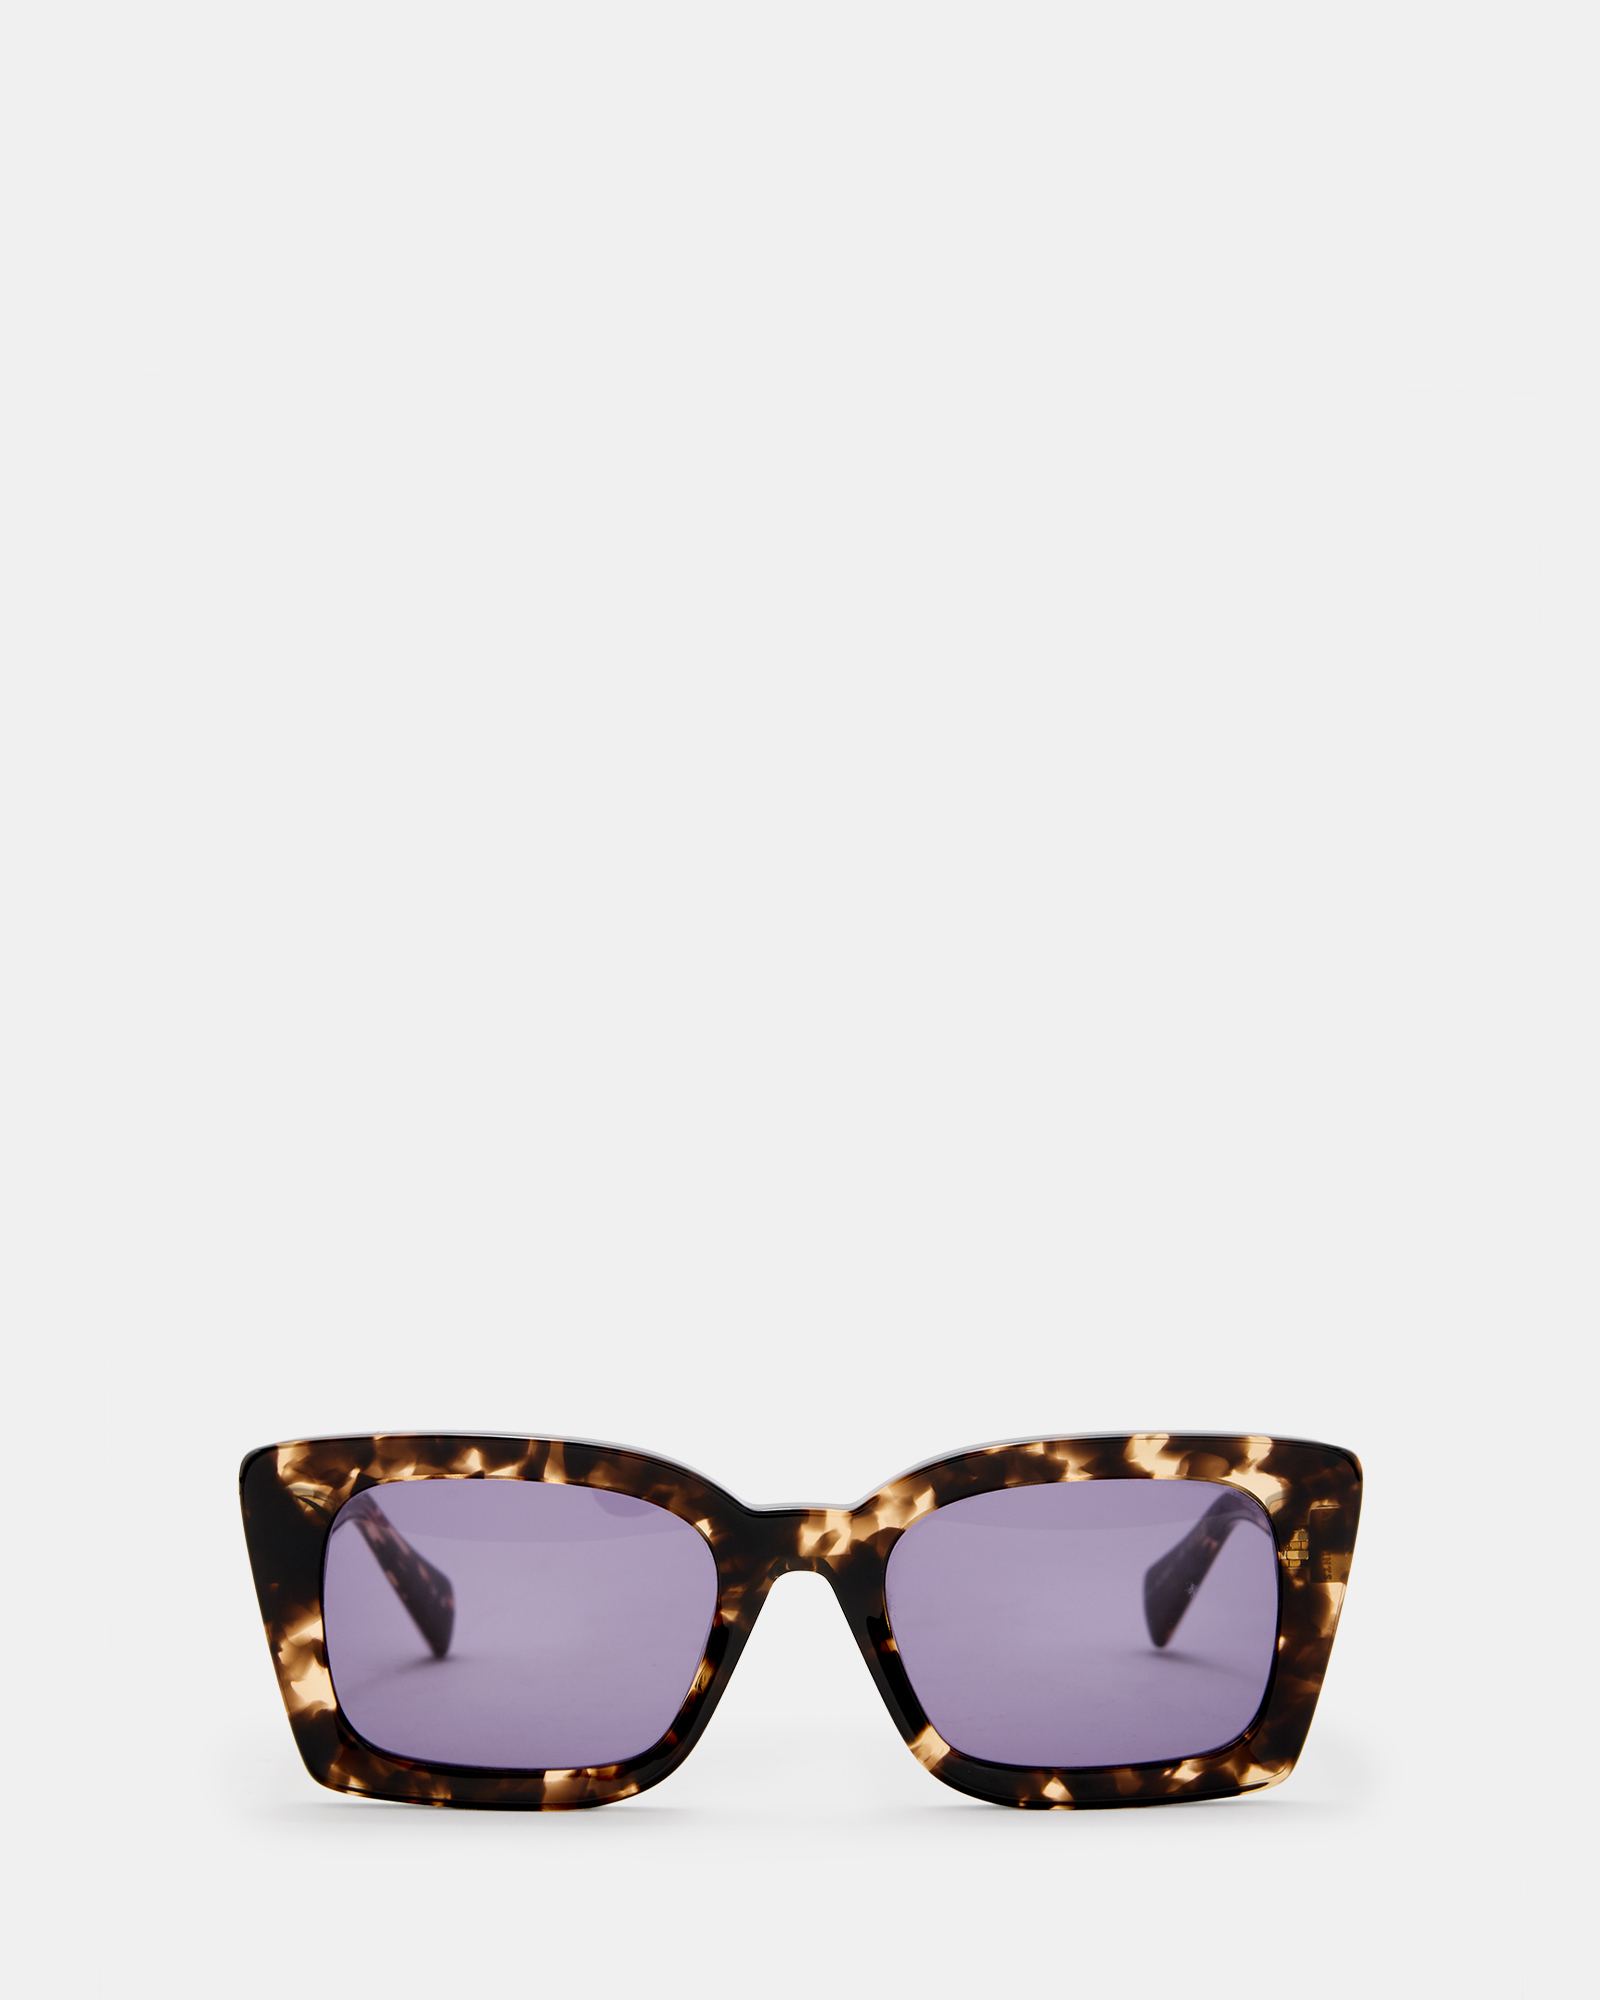 AllSaints Marla Square Bevelled Sunglasses,, BROWN DEMI TORT